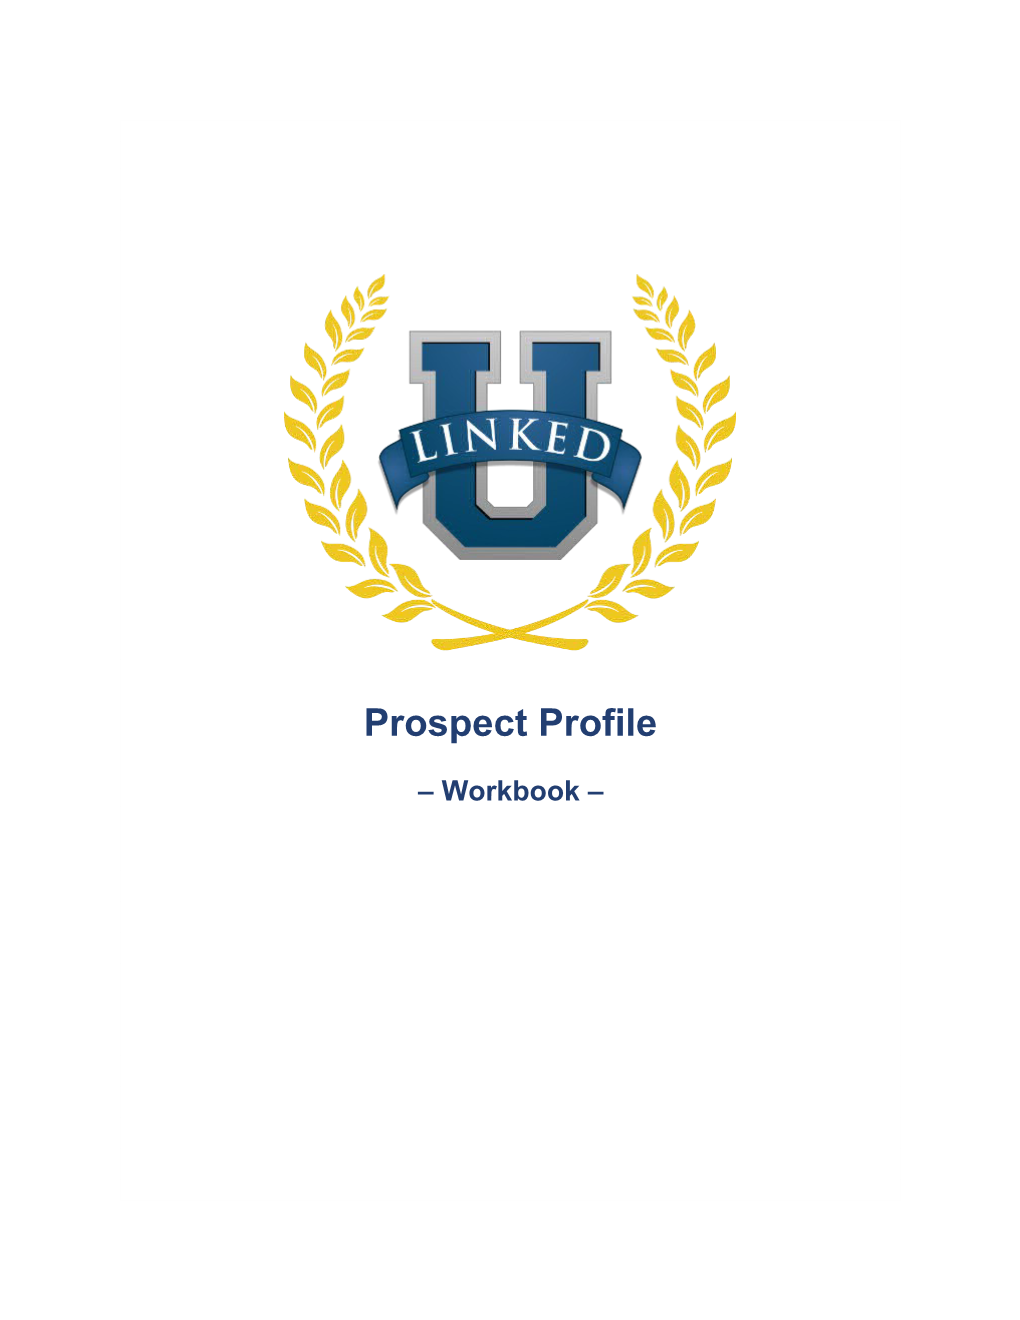 Prospect Profile Development - Sample 1